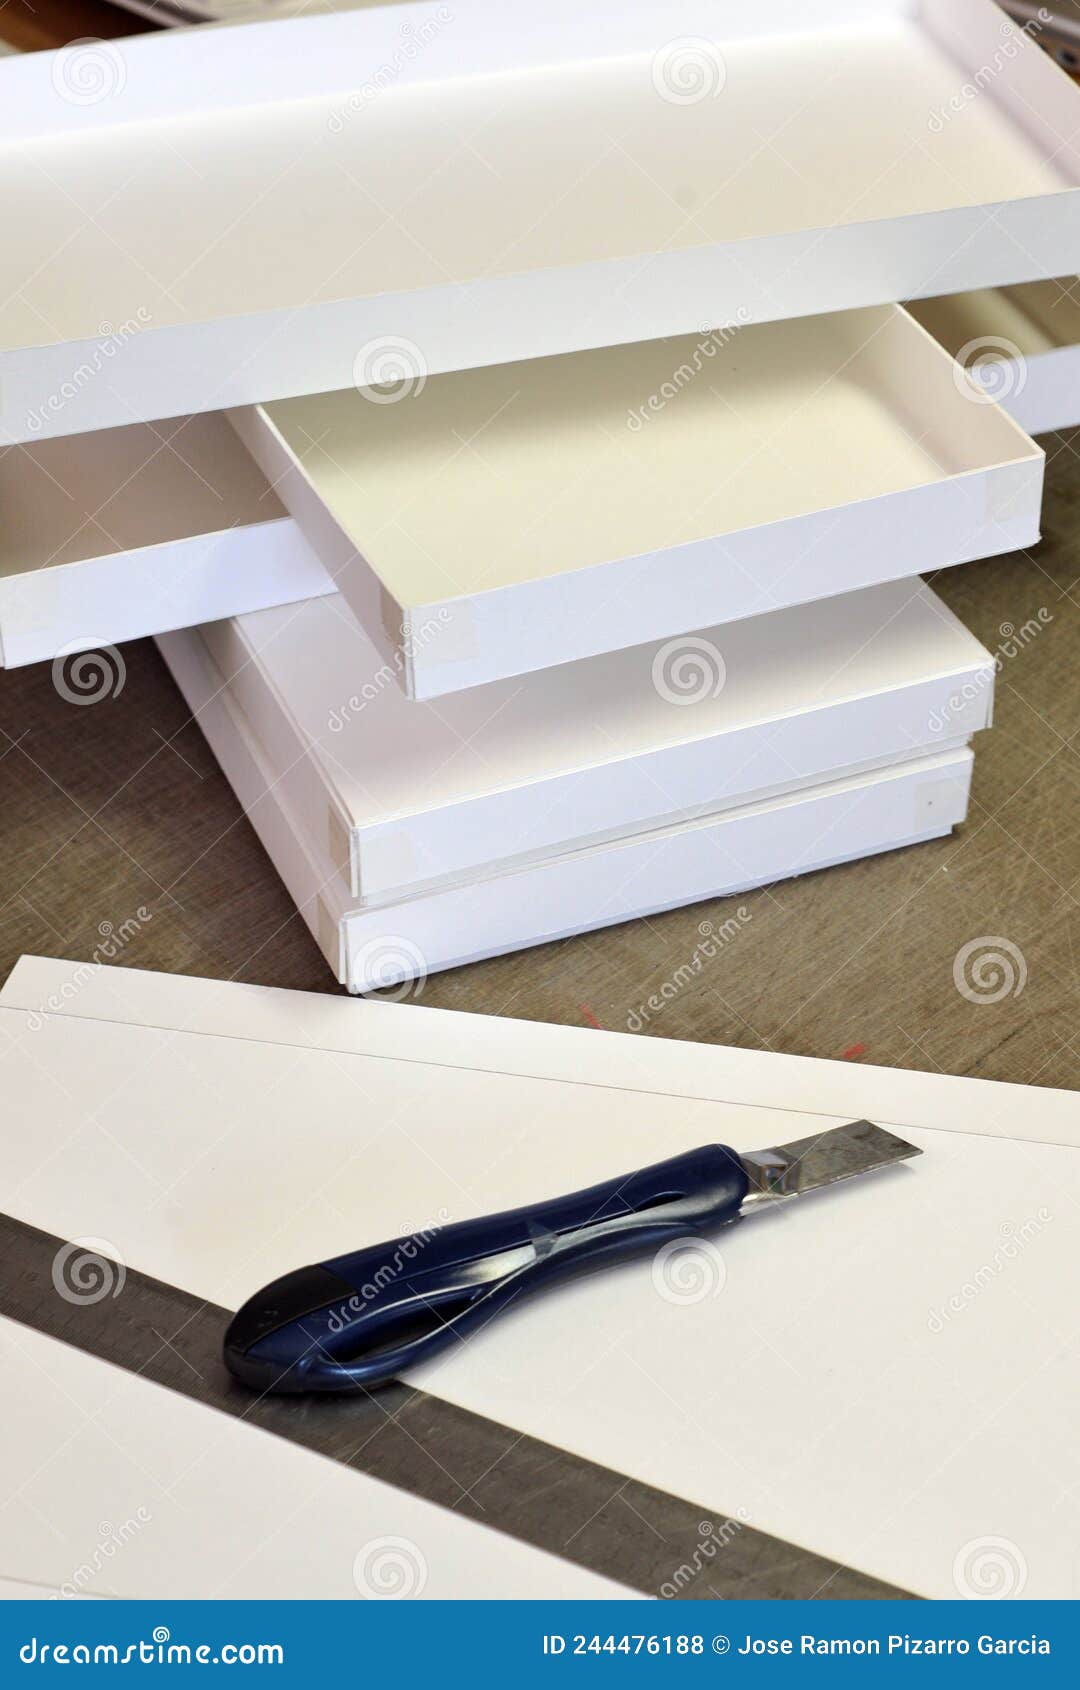 cajas de cartÃÂ³n hechas a mano para contener regalos